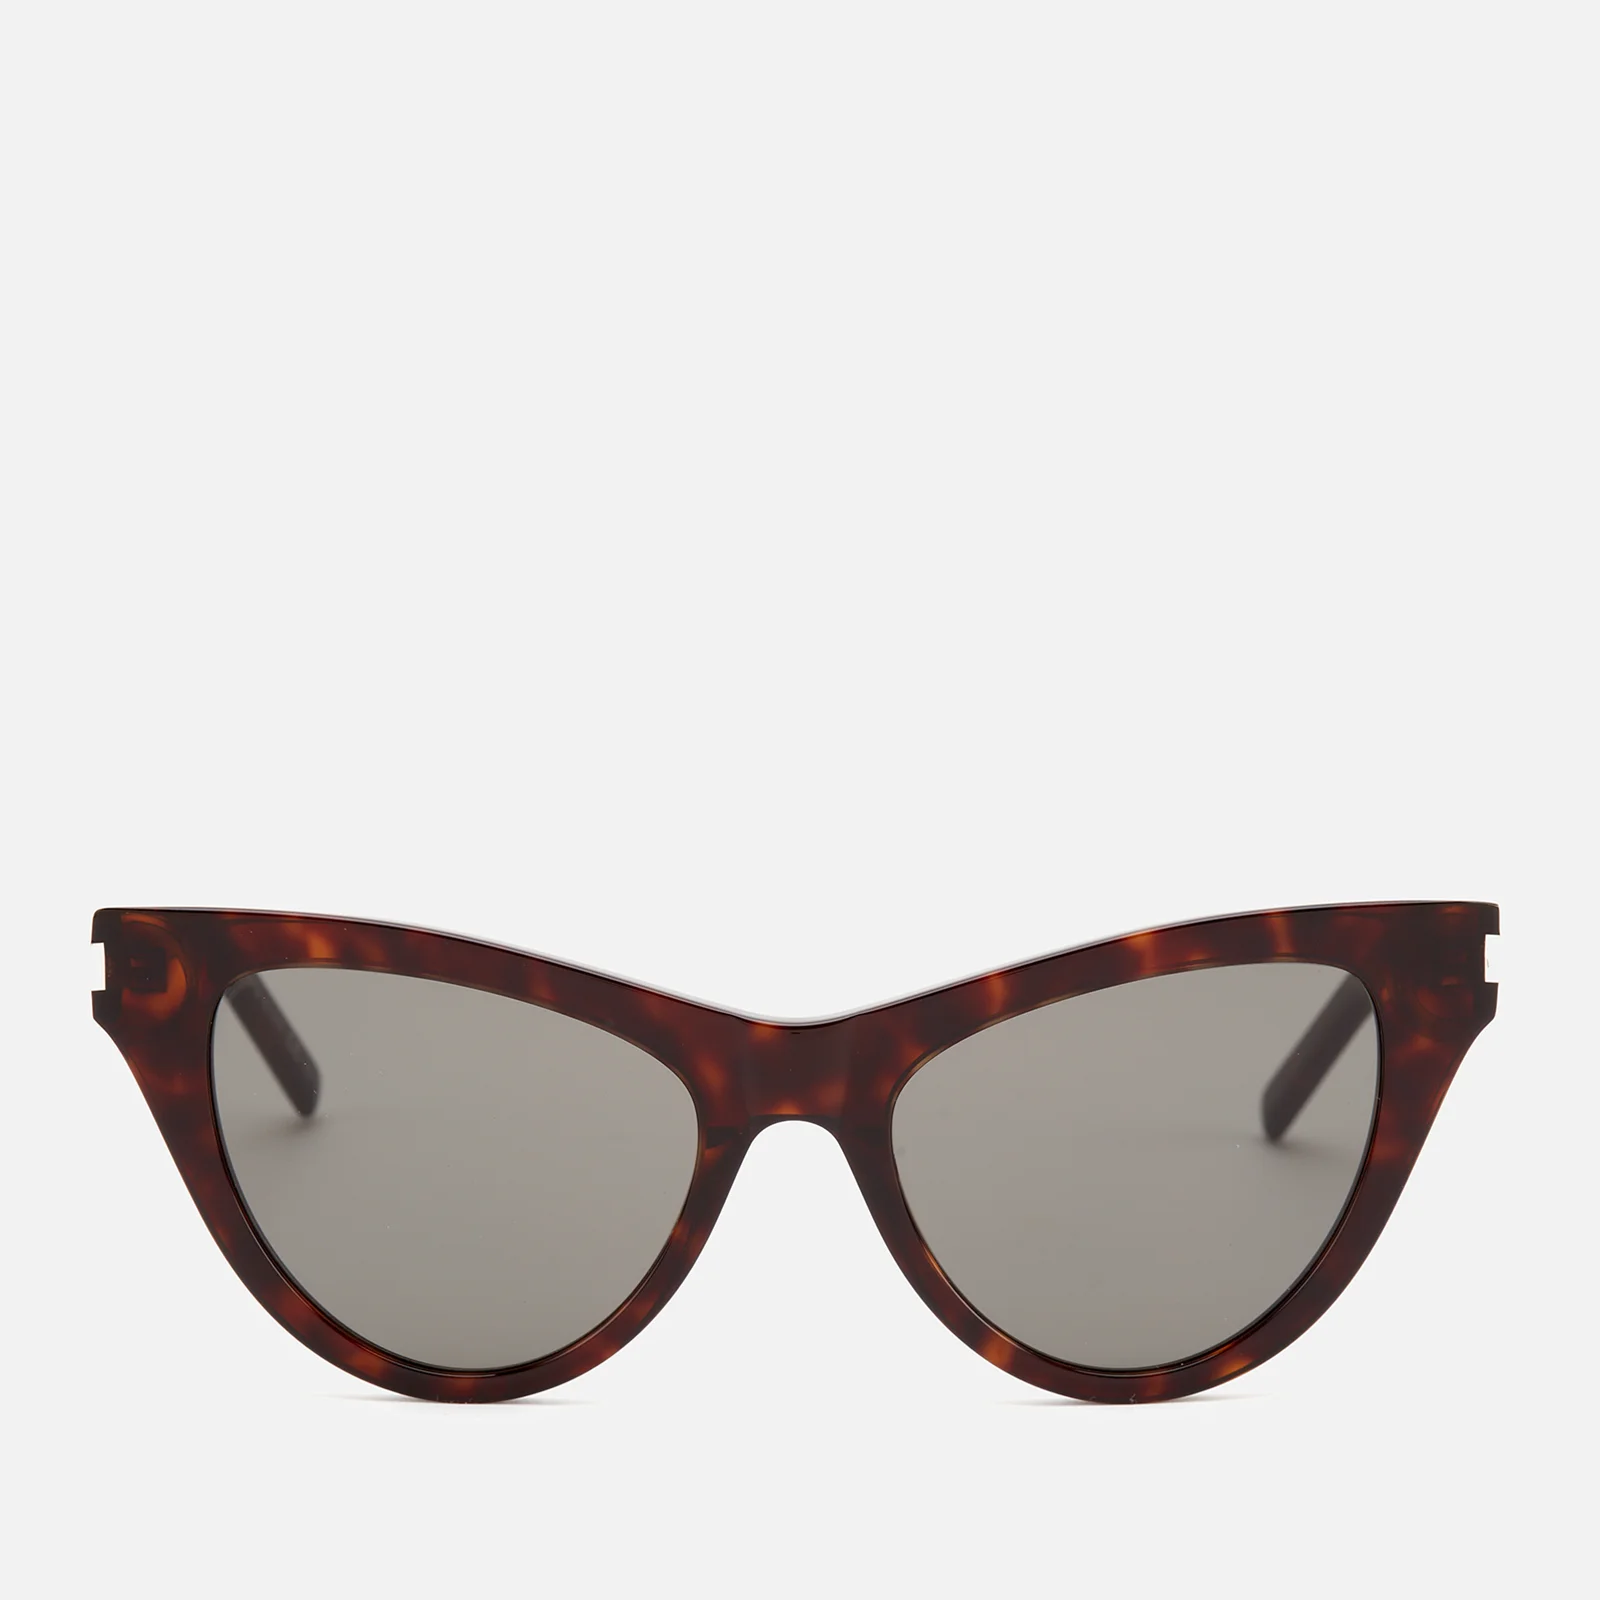 Saint Laurent Women's Cat Eye Acetate Sunglasses - Havana/Grey Image 1